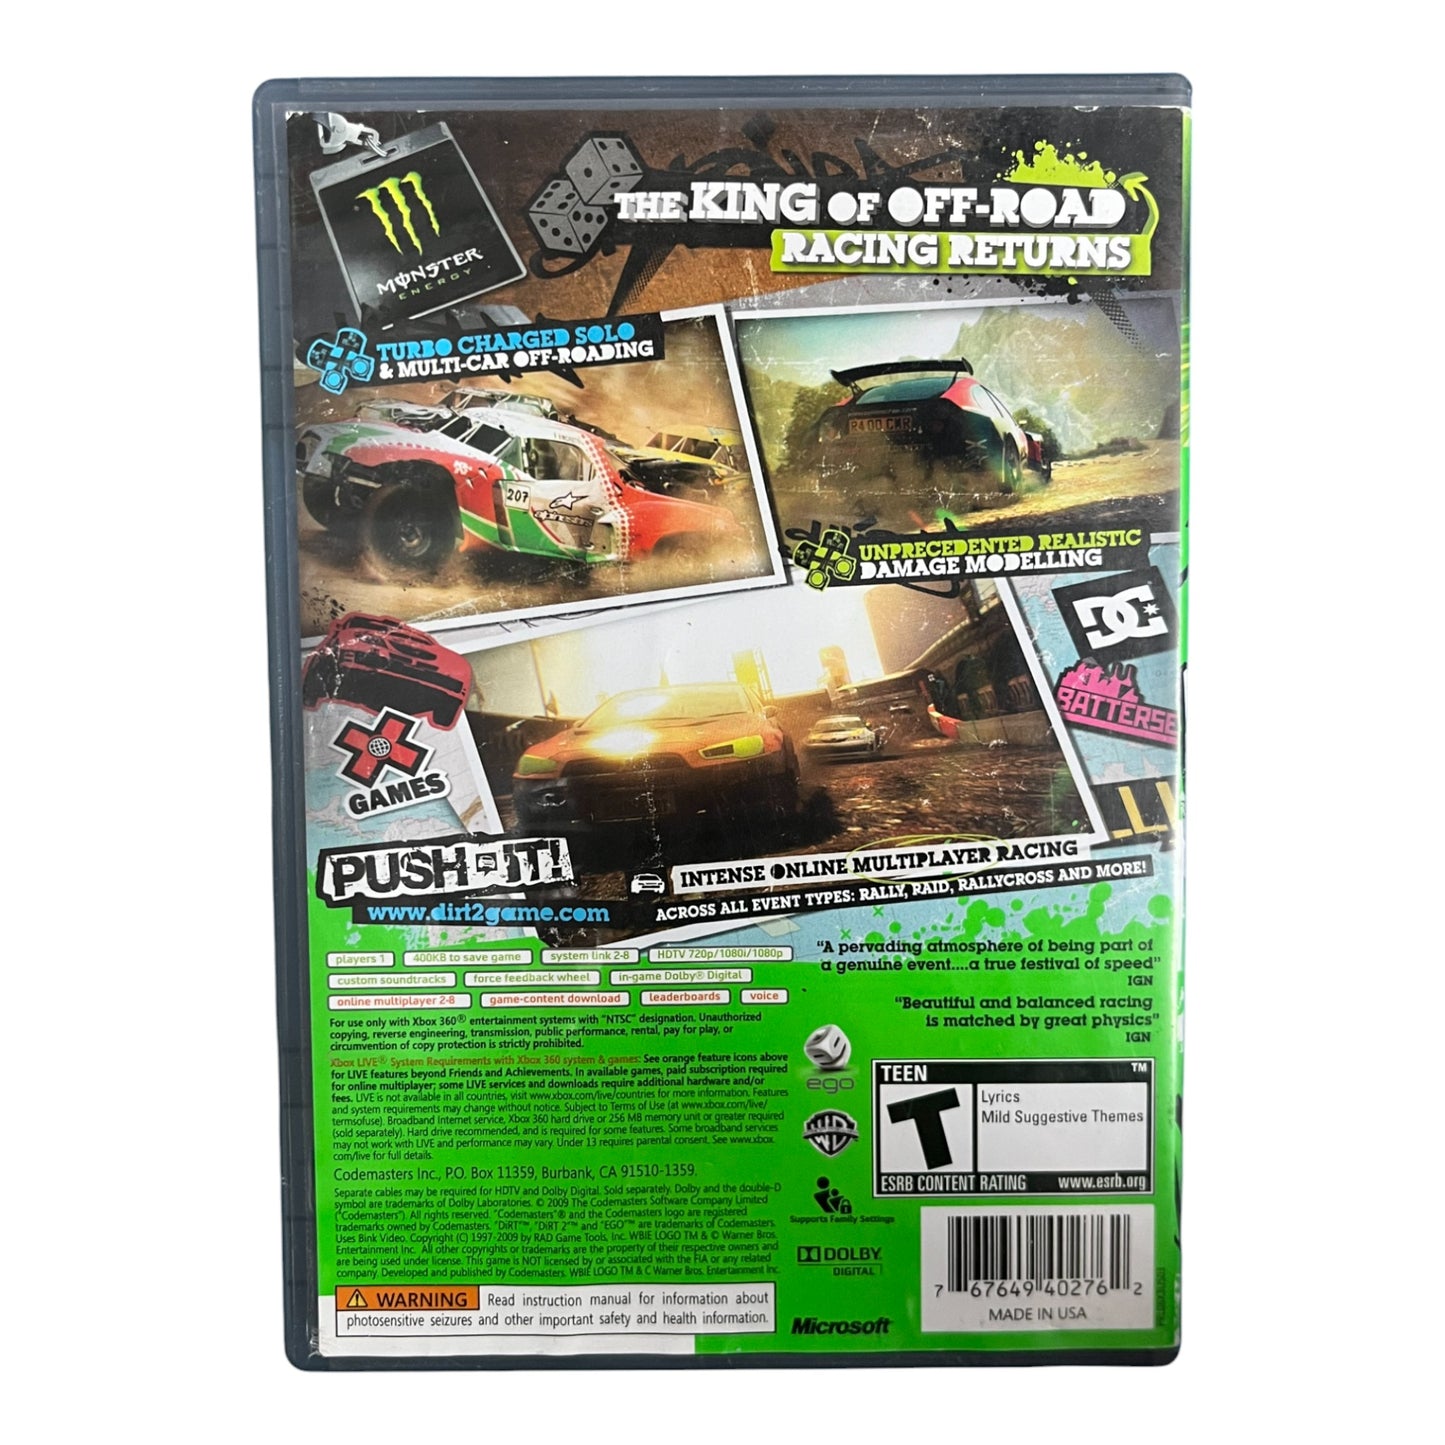 Dirt 2 (Xbox 360)